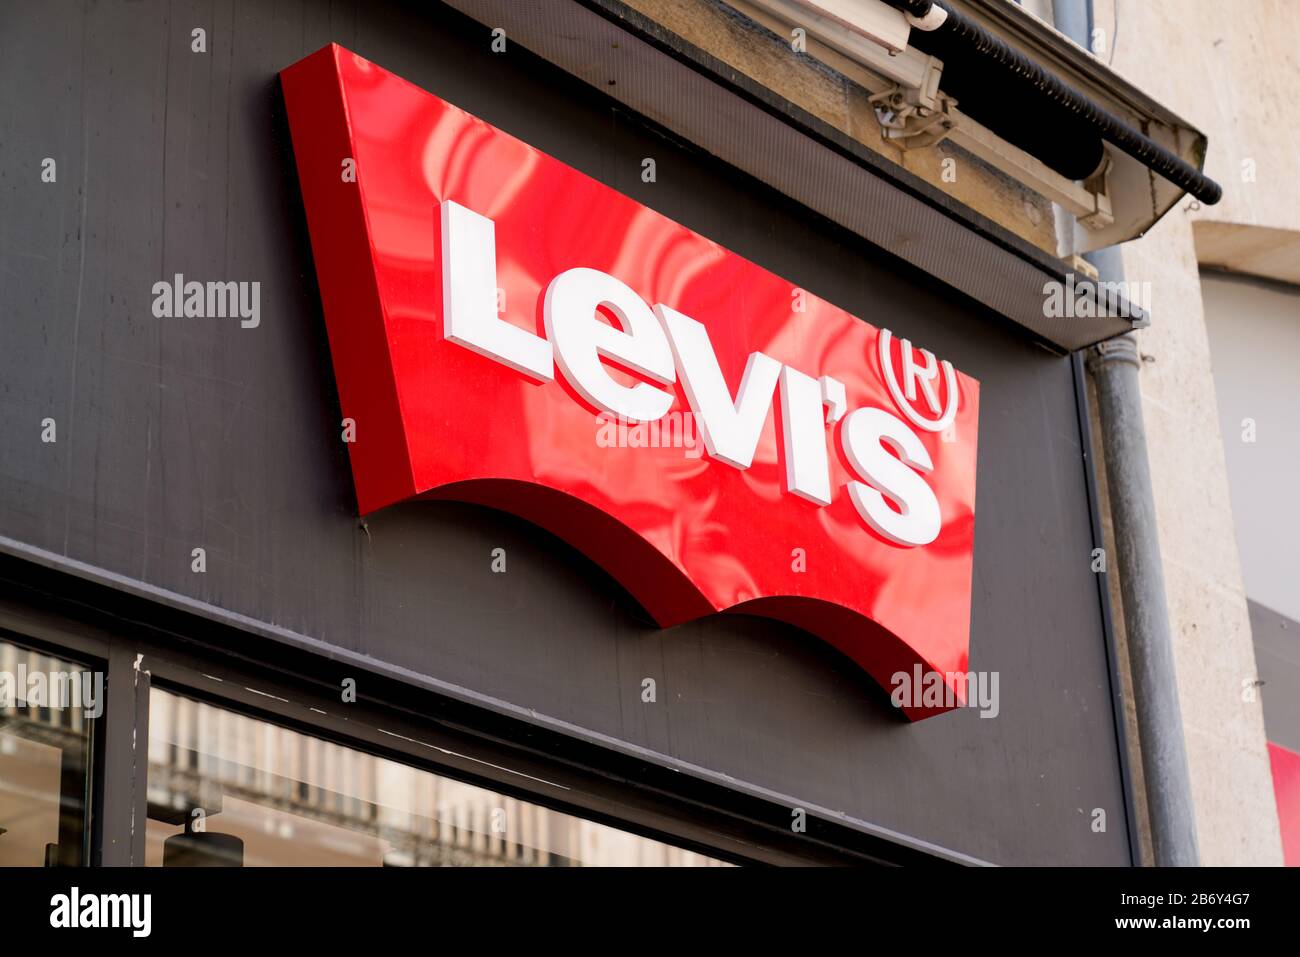 Bordeaux , Aquitaine / France - 09 18 2019 : Levi's Store Logo window Levi  Strauss levis American clothing company for denim jeans Stock Photo - Alamy